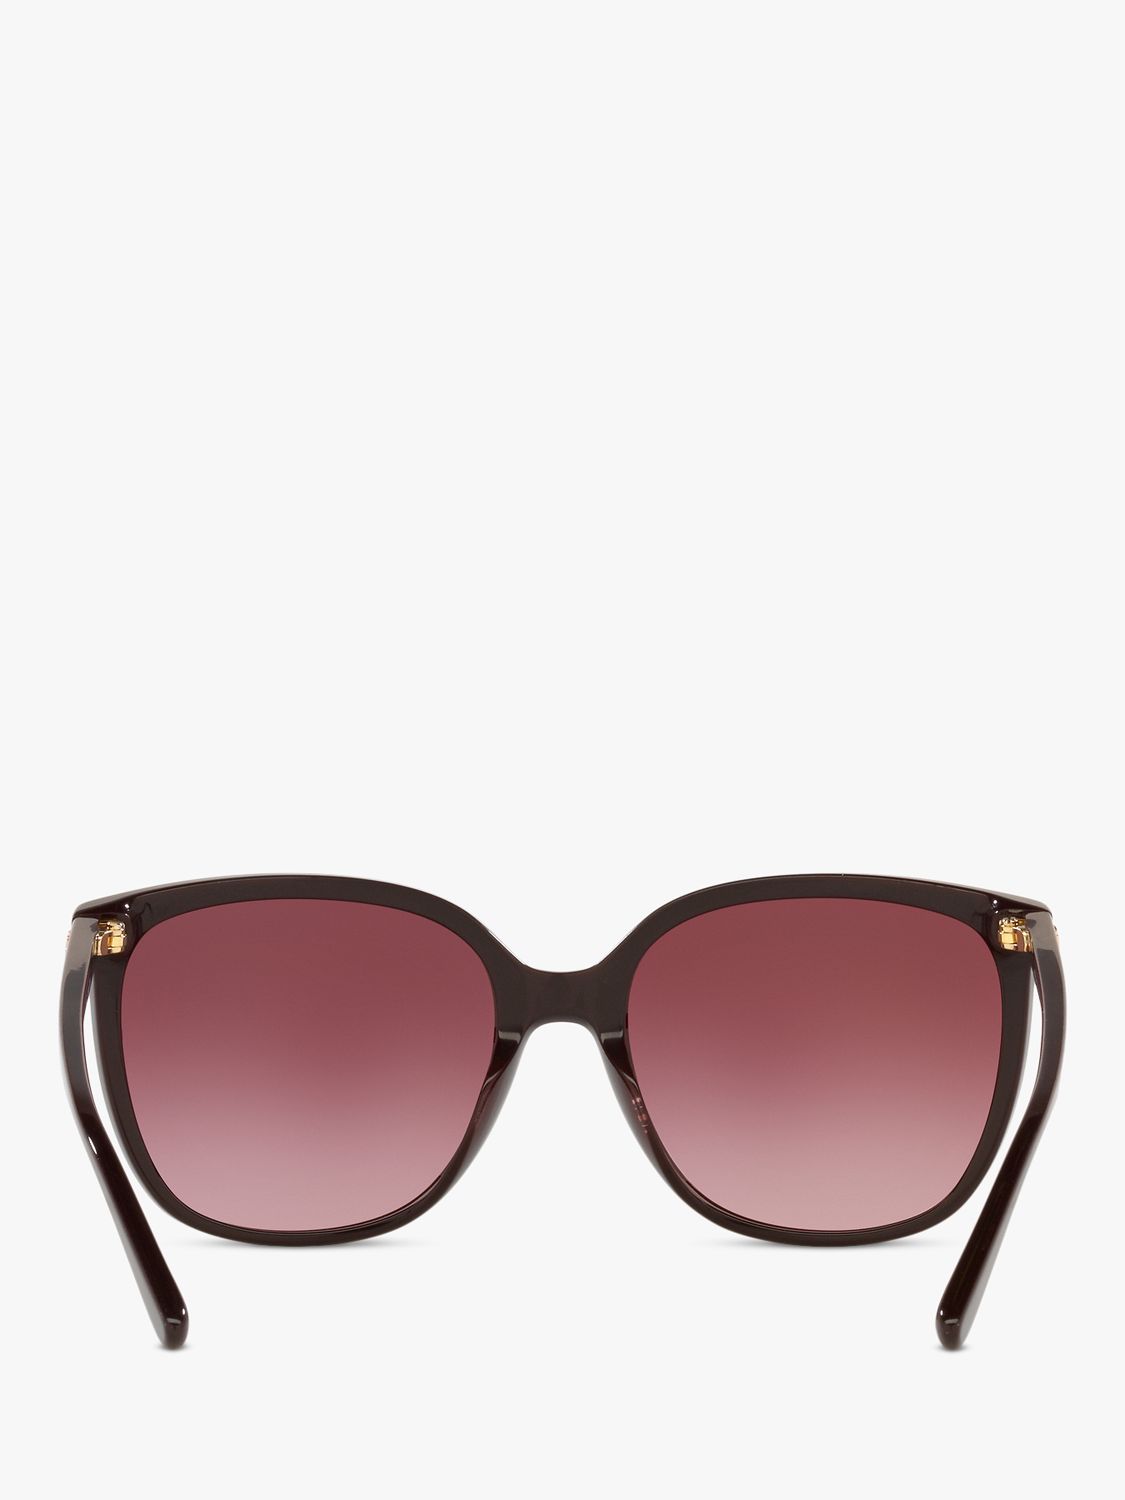 Michael Kors MK2137U Women's Anaheim Square Sunglasses, Brown/Red Gradient  at John Lewis & Partners